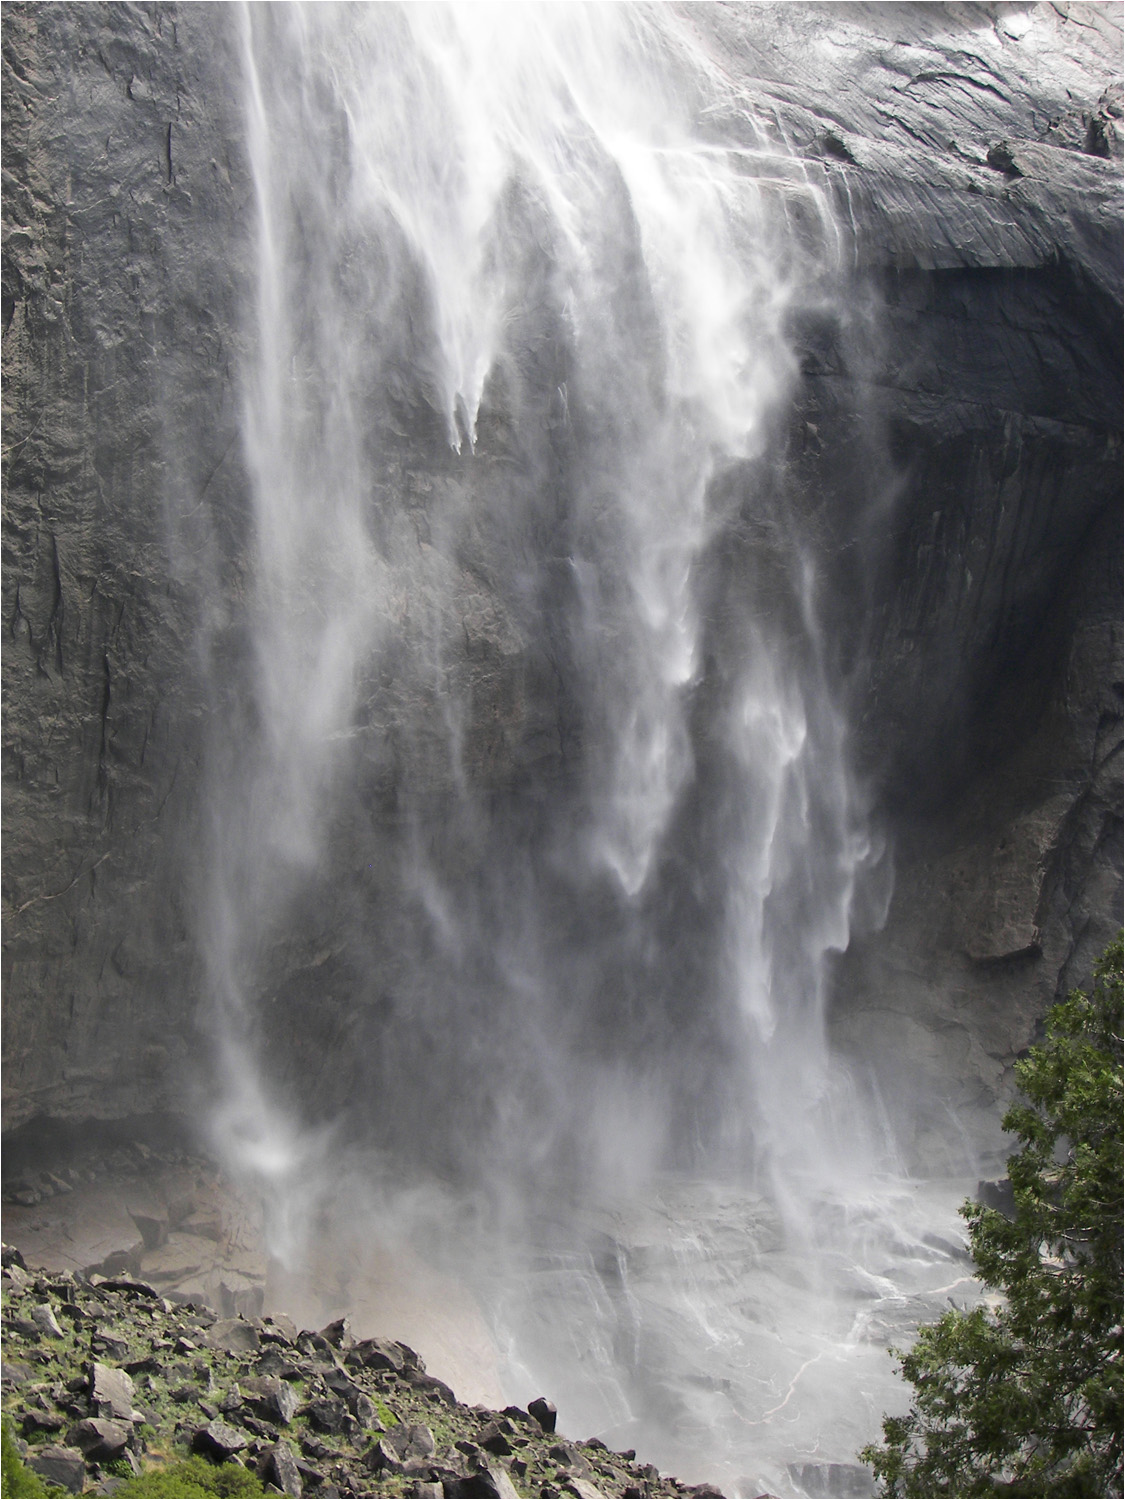 Upper Yosemite Falls Hike- First views of upper falls from trail